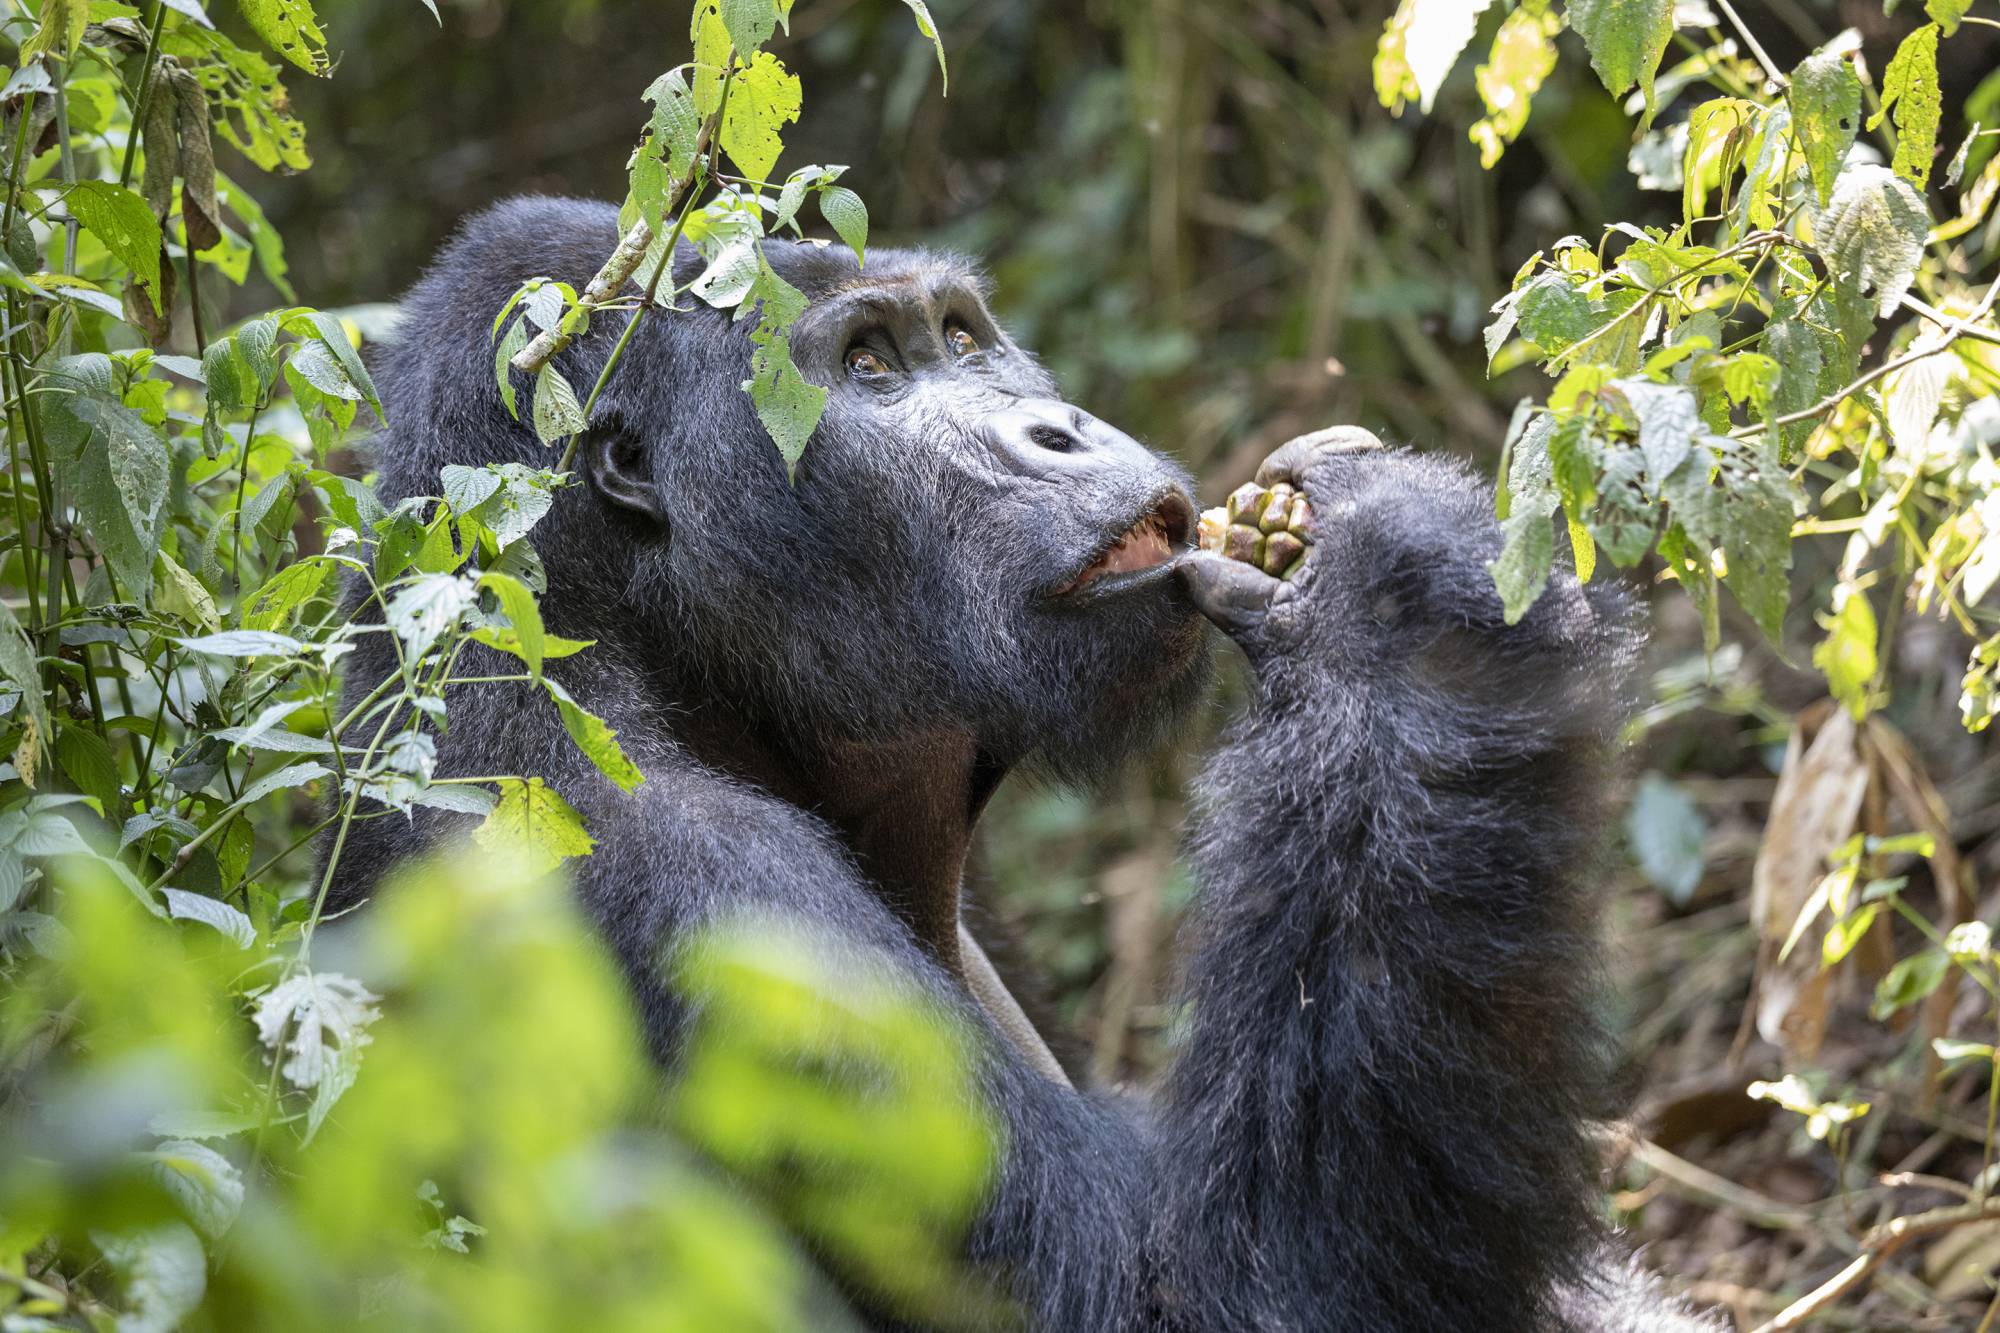 The Endangered Mountain Gorillas